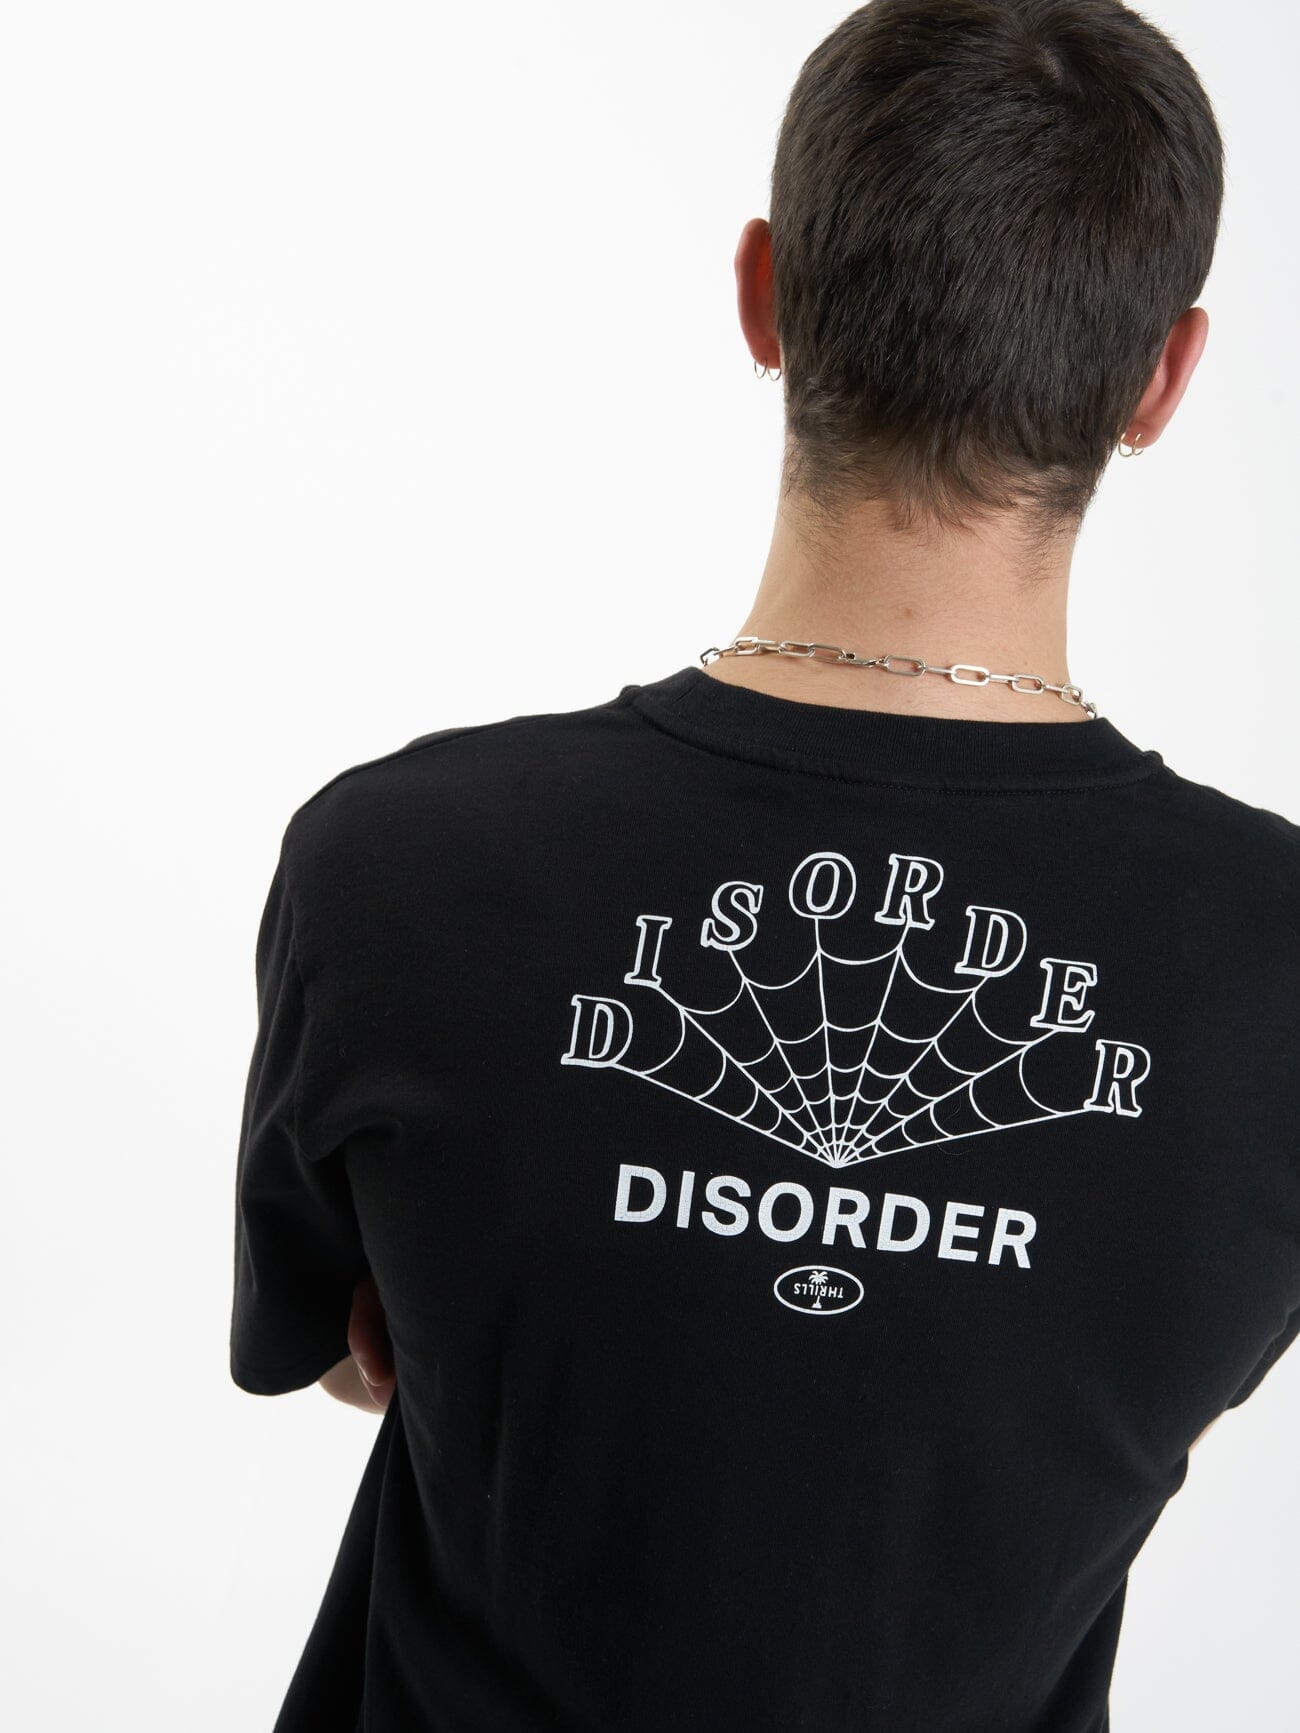 Disorder Disorder Oversize Fit Tee - Black